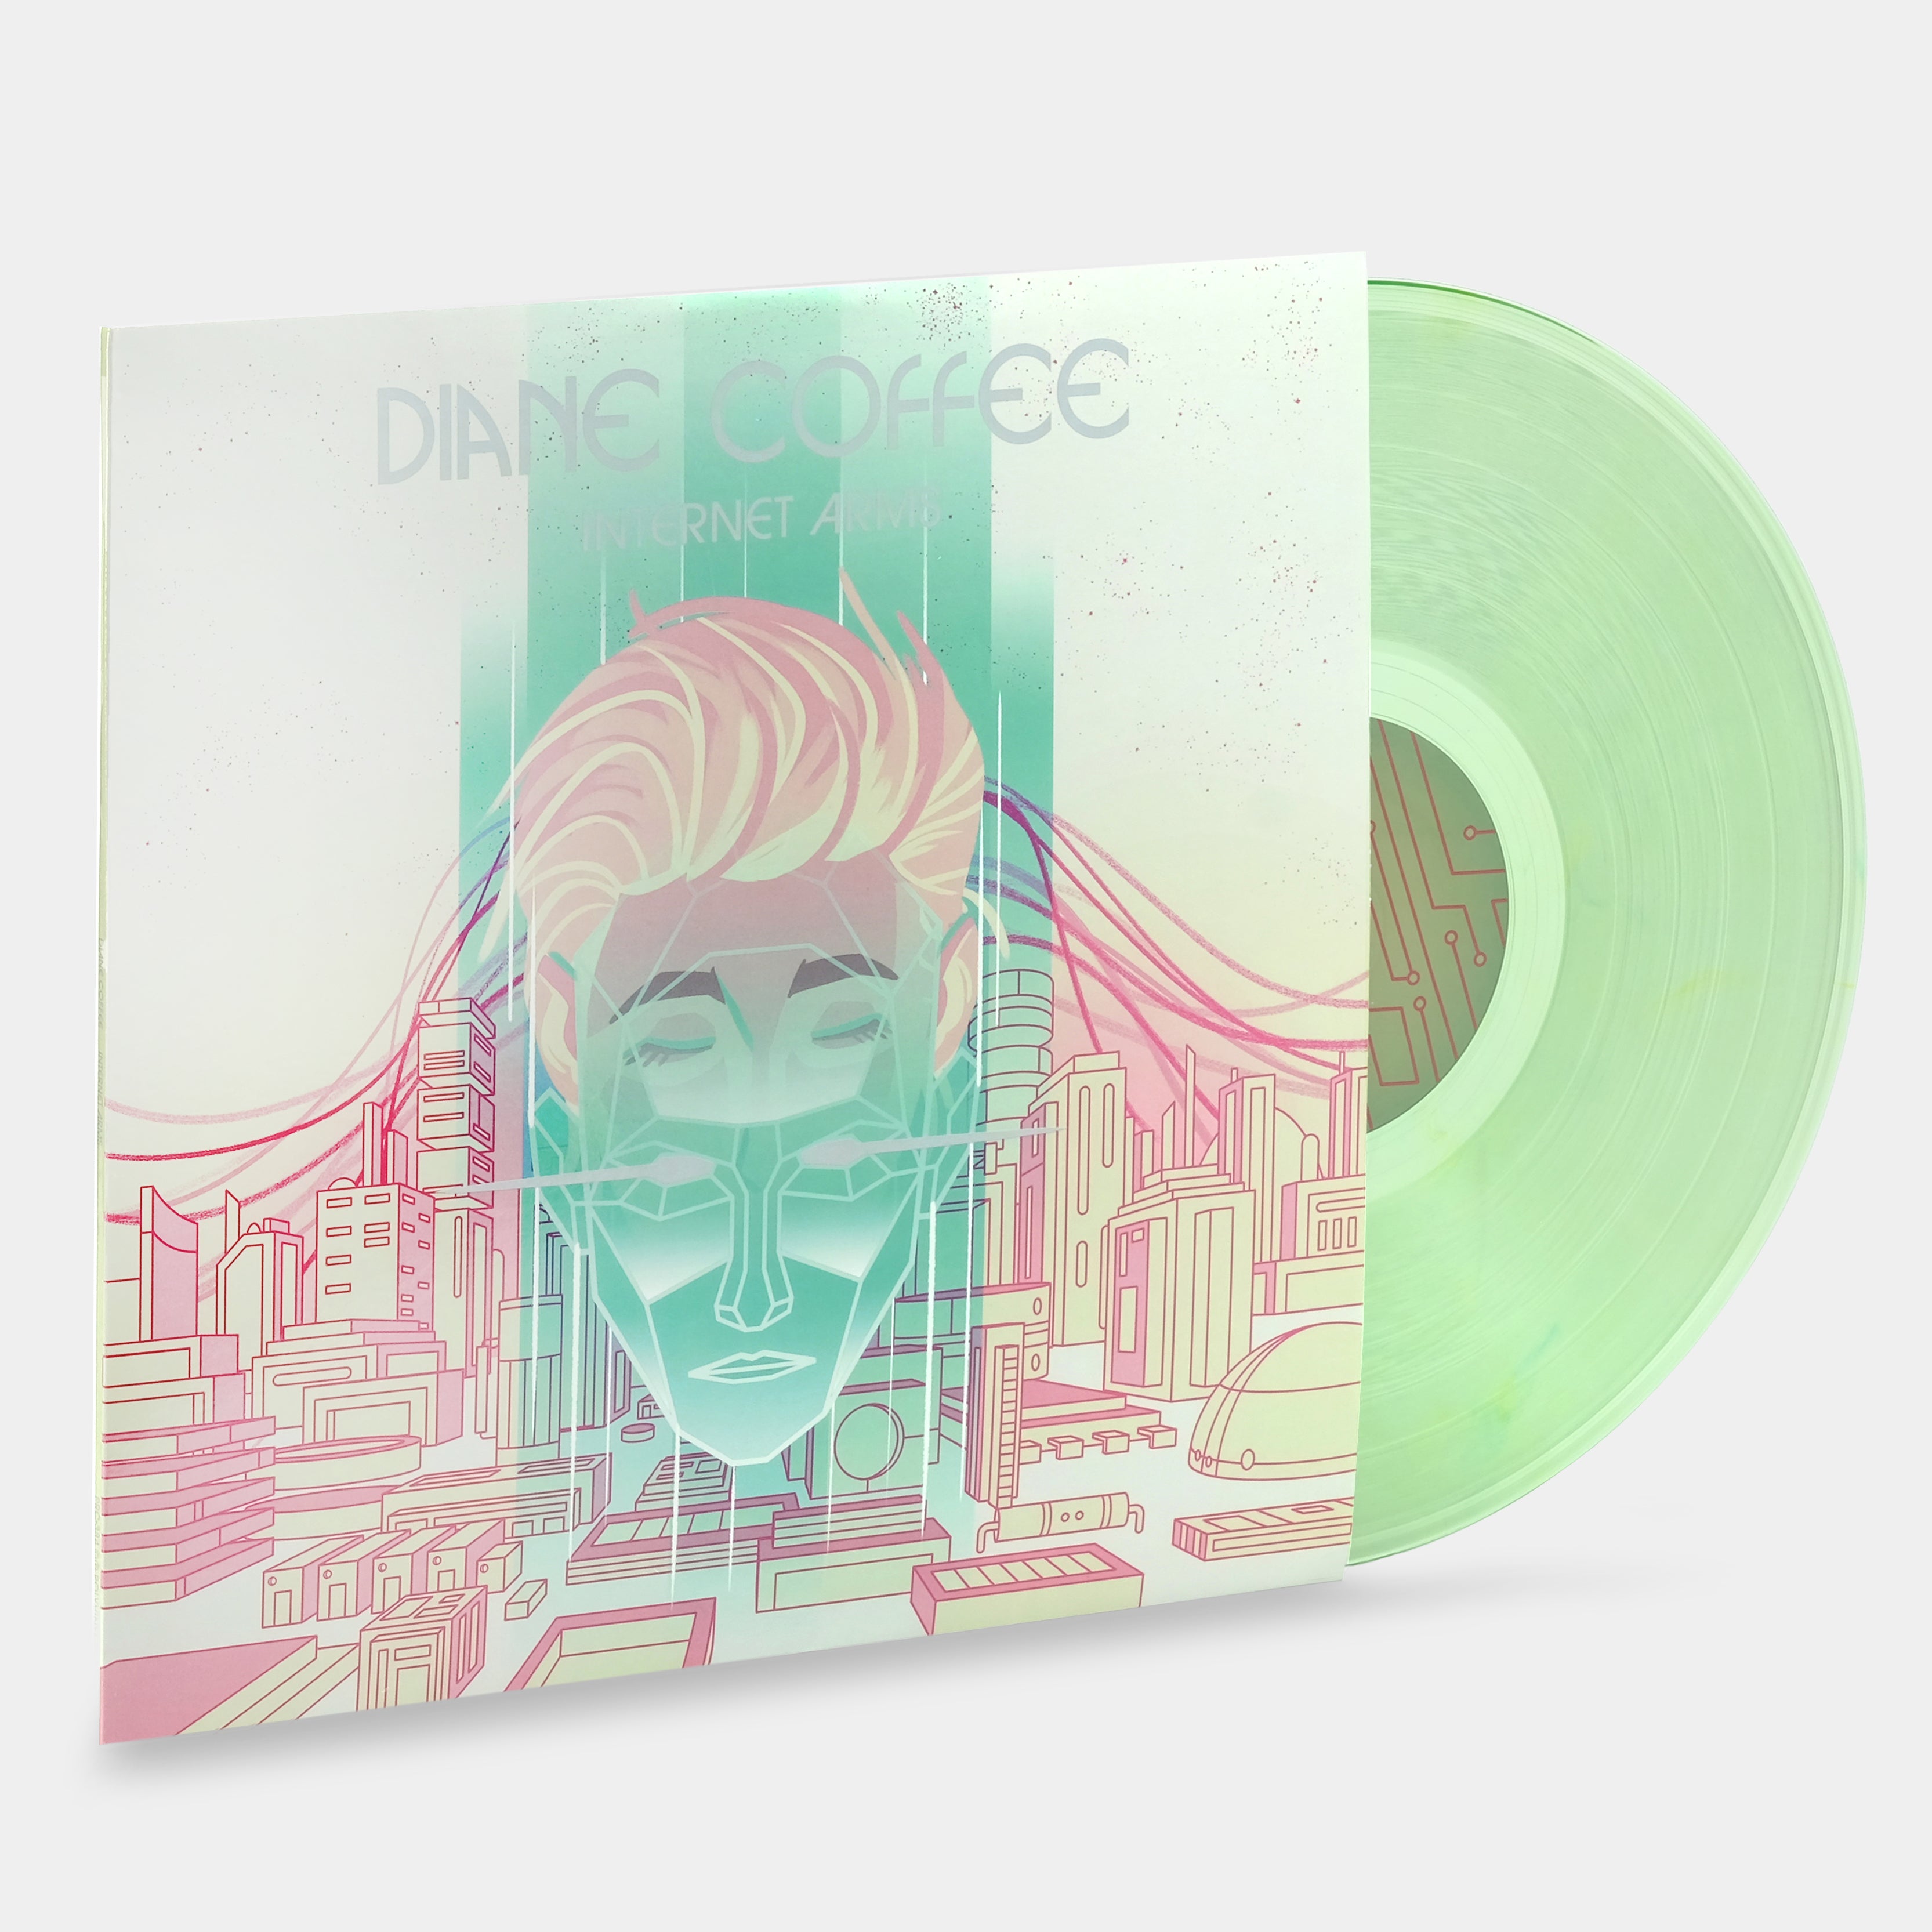 Diane Coffee - Internet Arms LP Clear Mint Green Vinyl Record